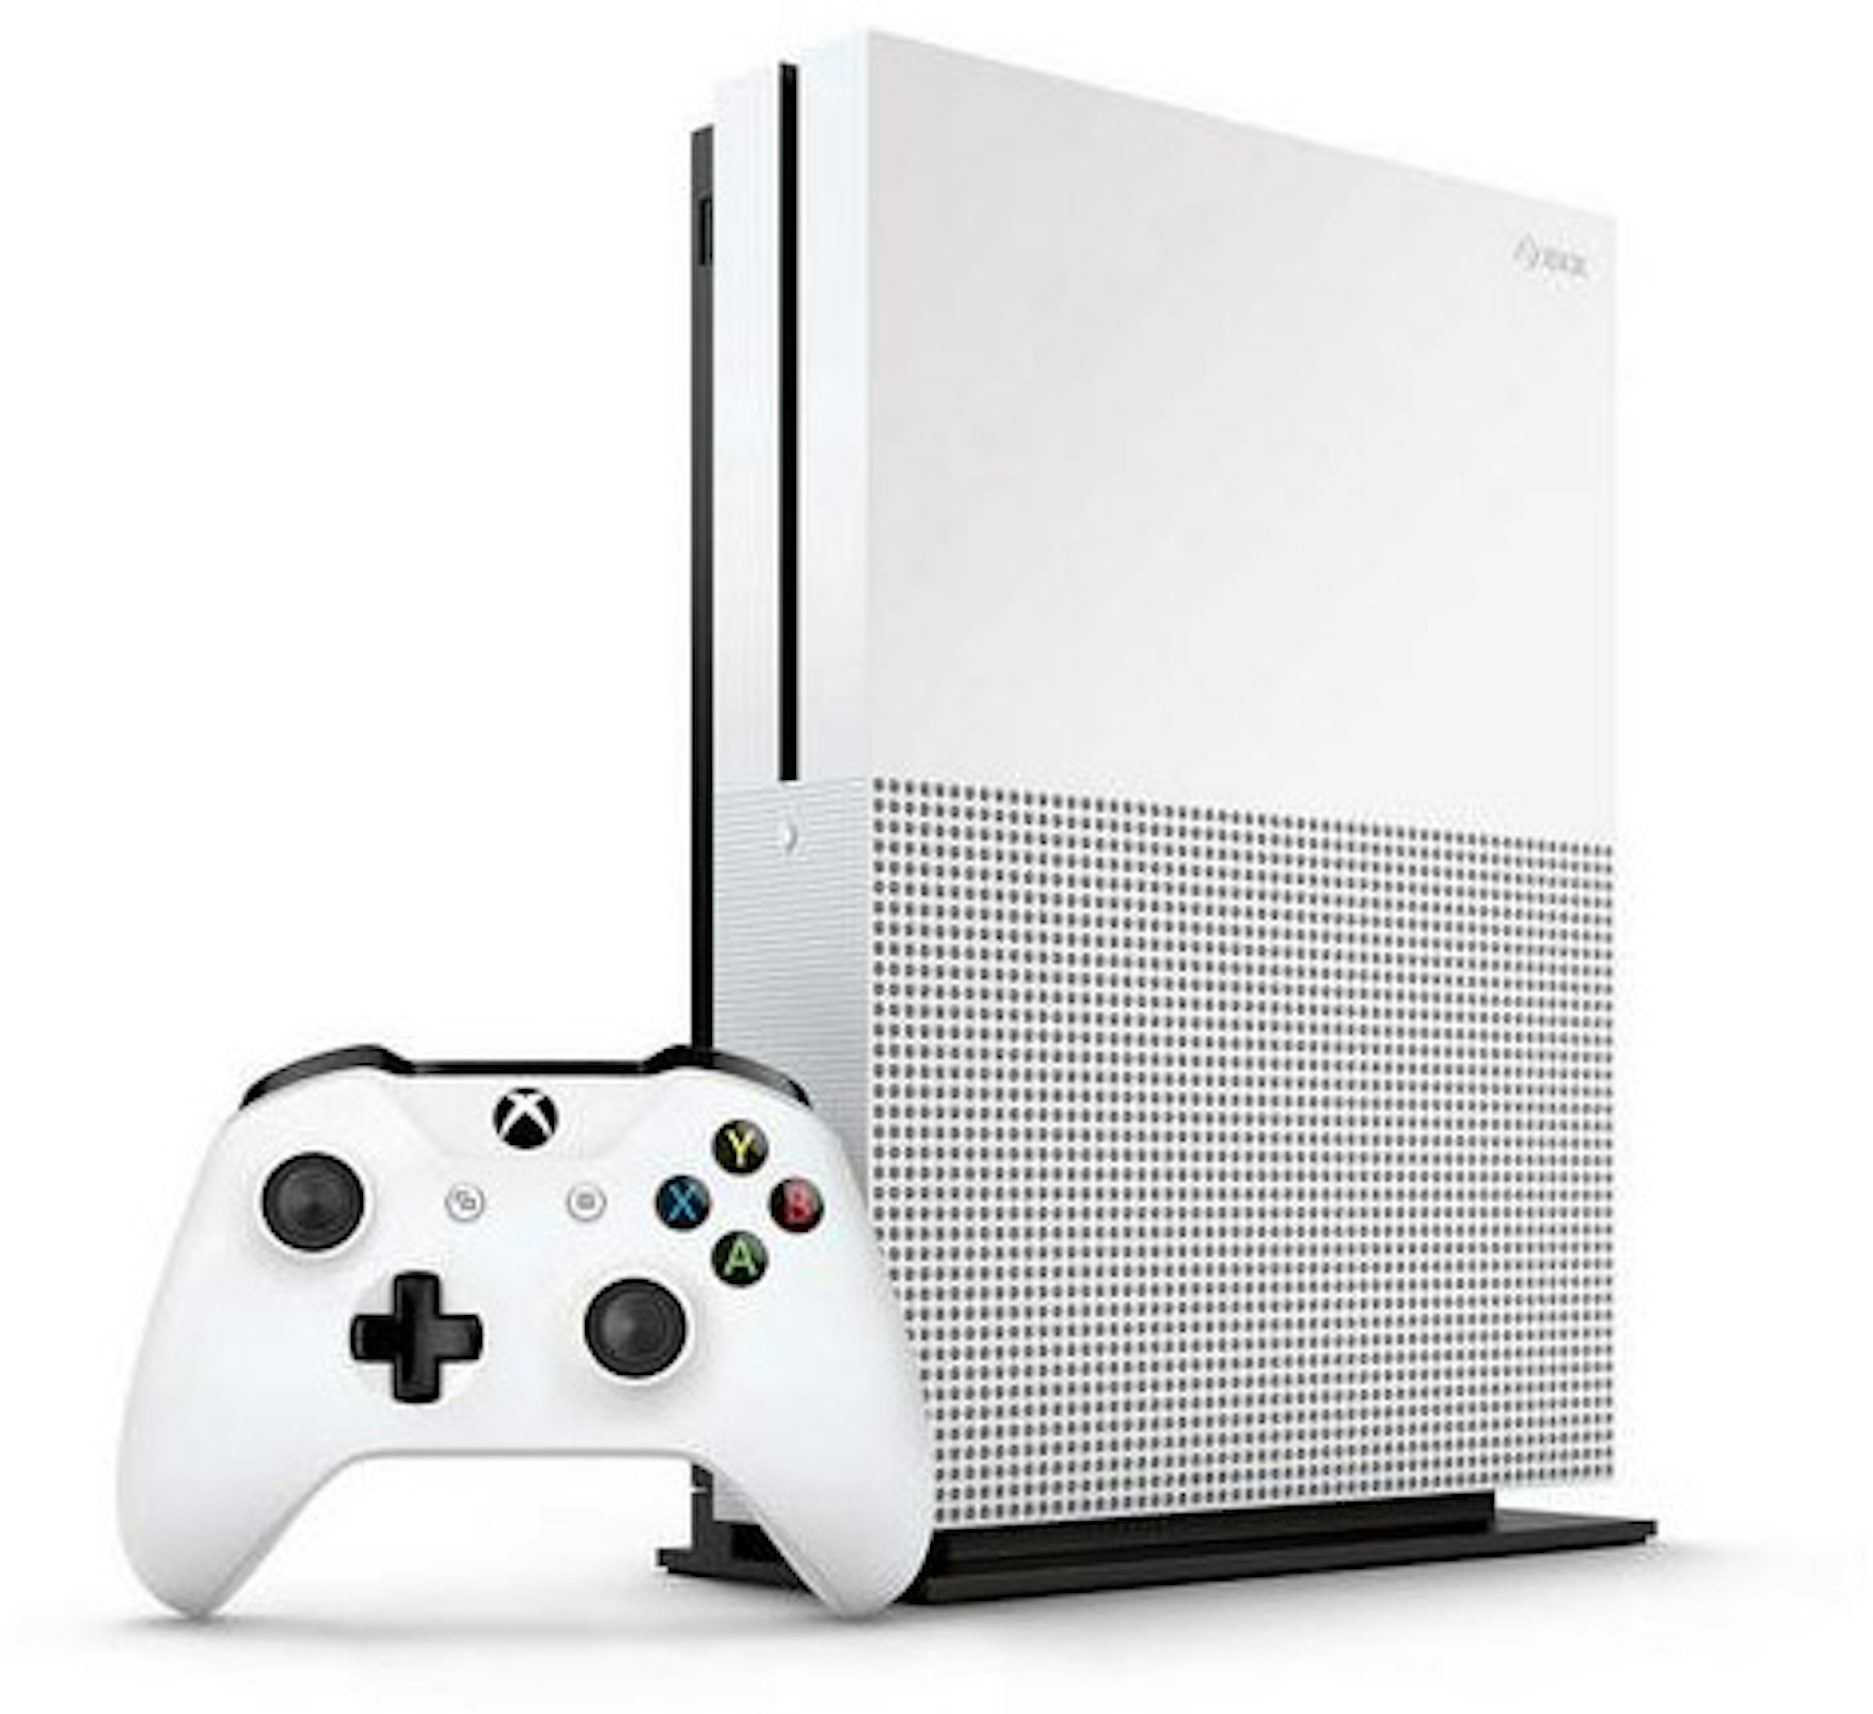 Microsoft Xbox One S 1TB Console White (US Plug) - GB